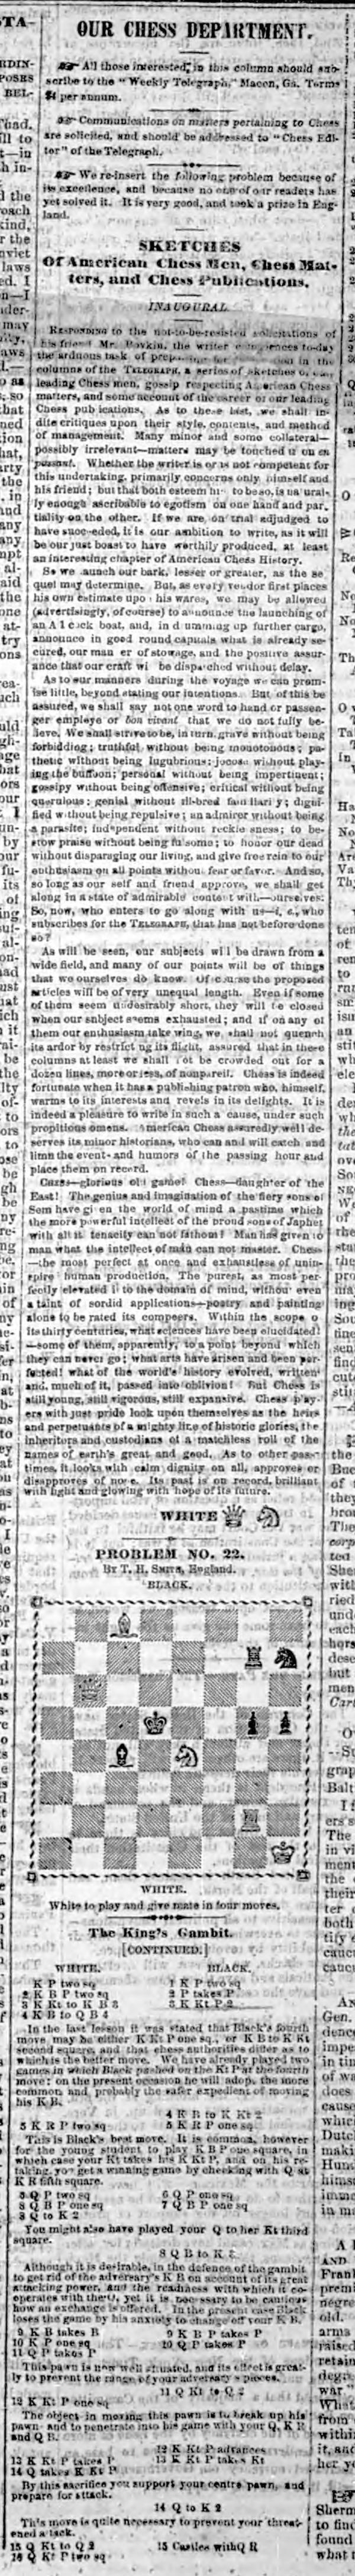 1866.12.31-01 Macon Georgia Weekly Telegraph.jpg